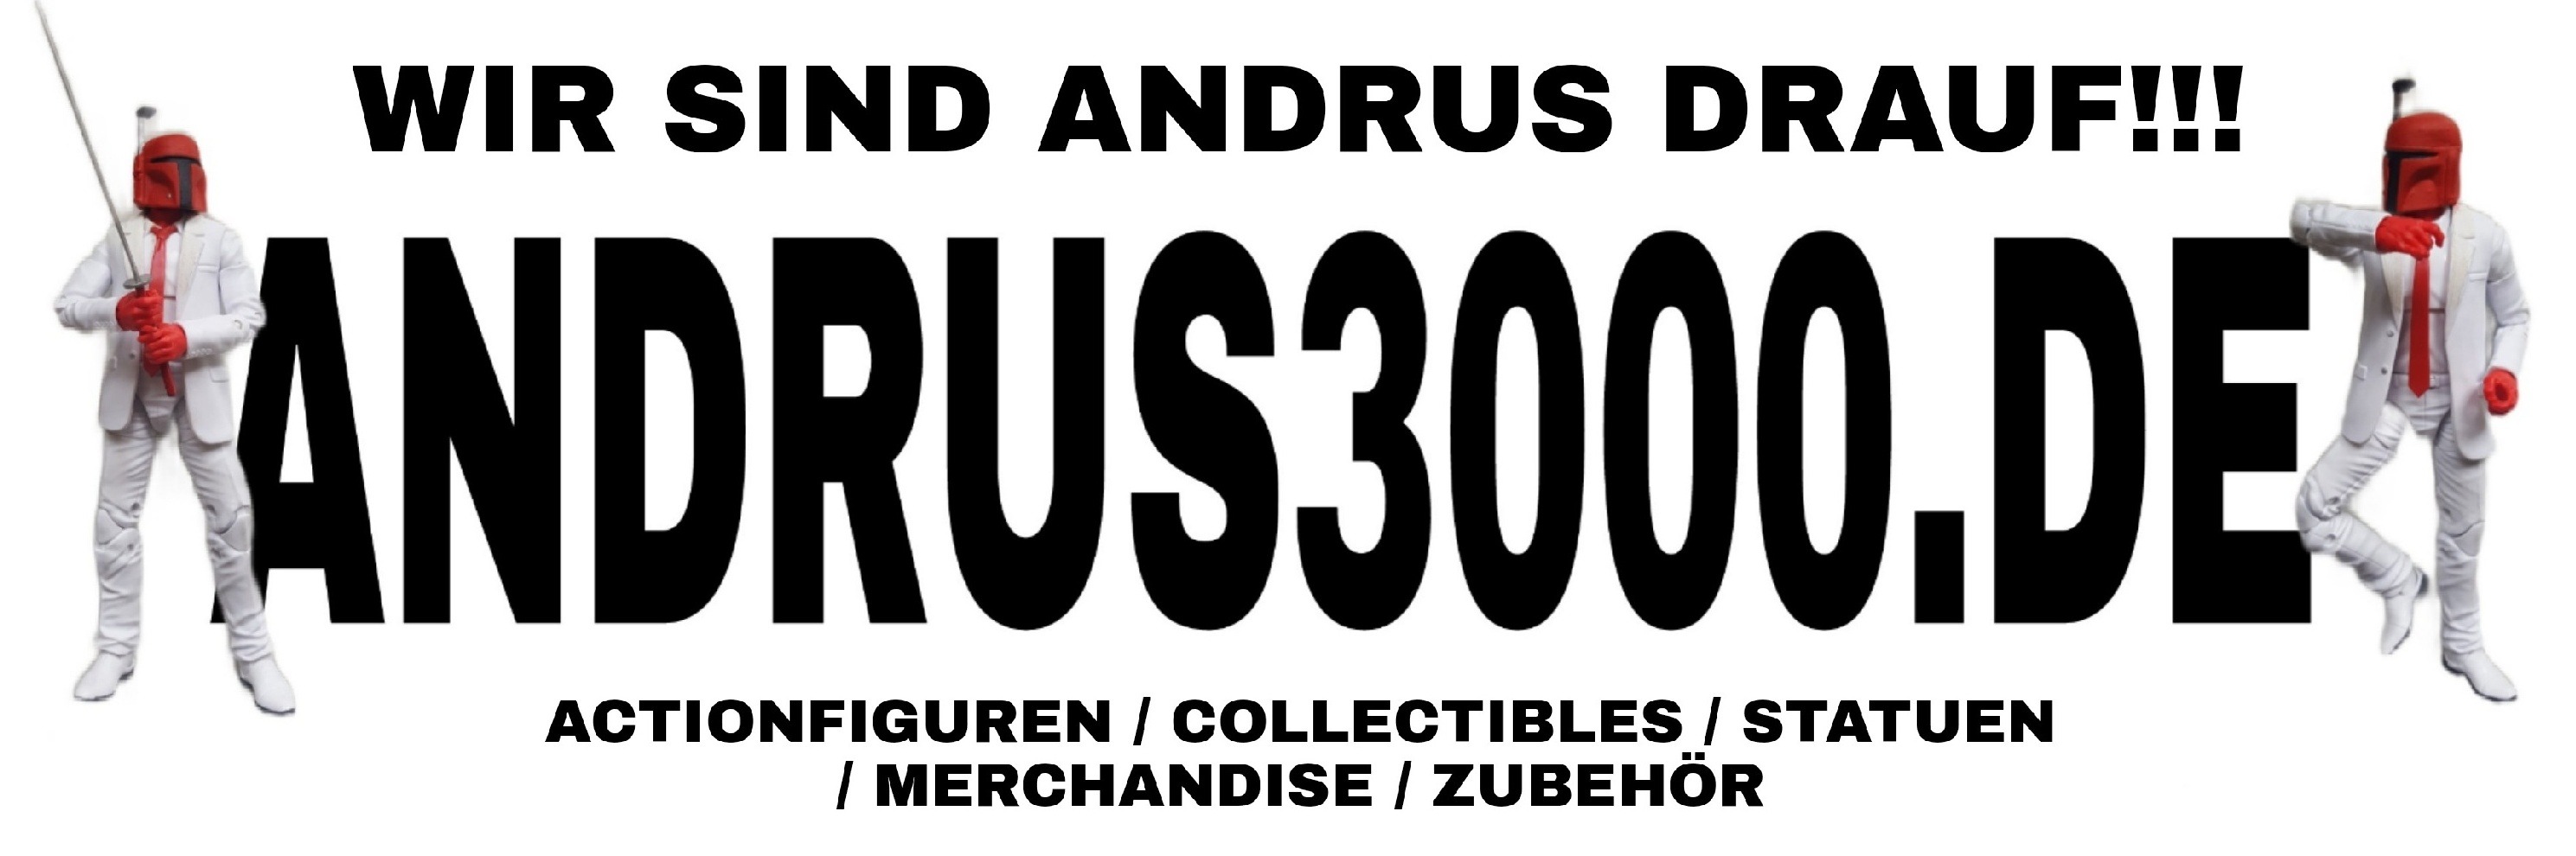 Andrus3000